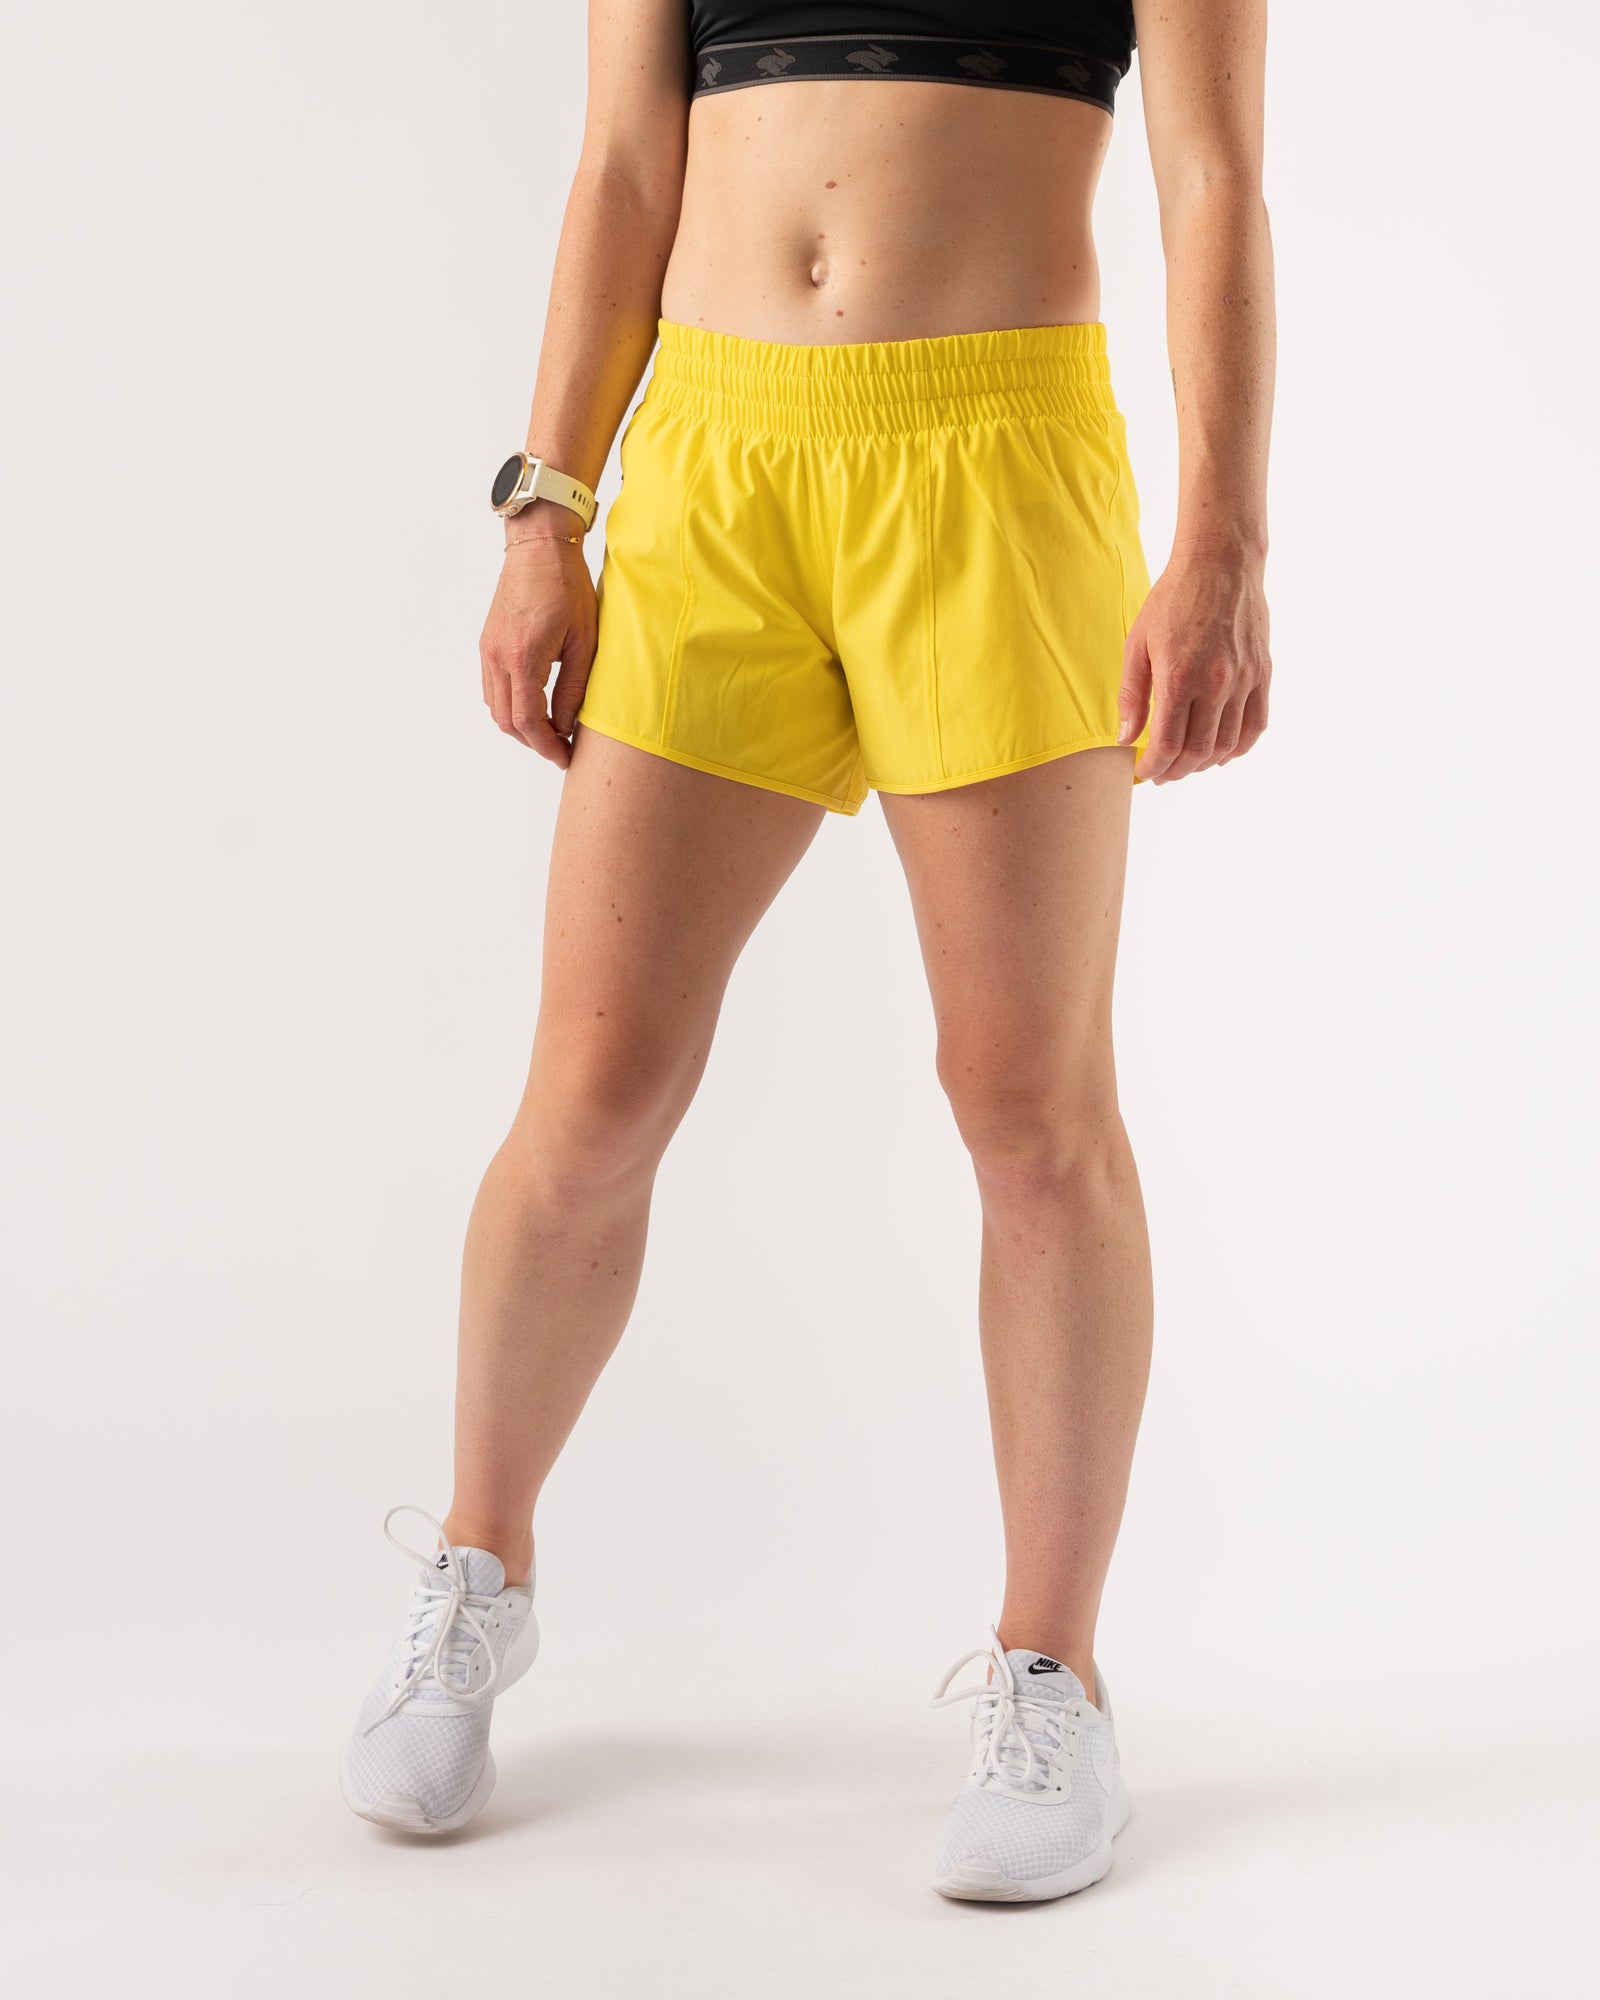 Women's Athletic Shorts - rabbit